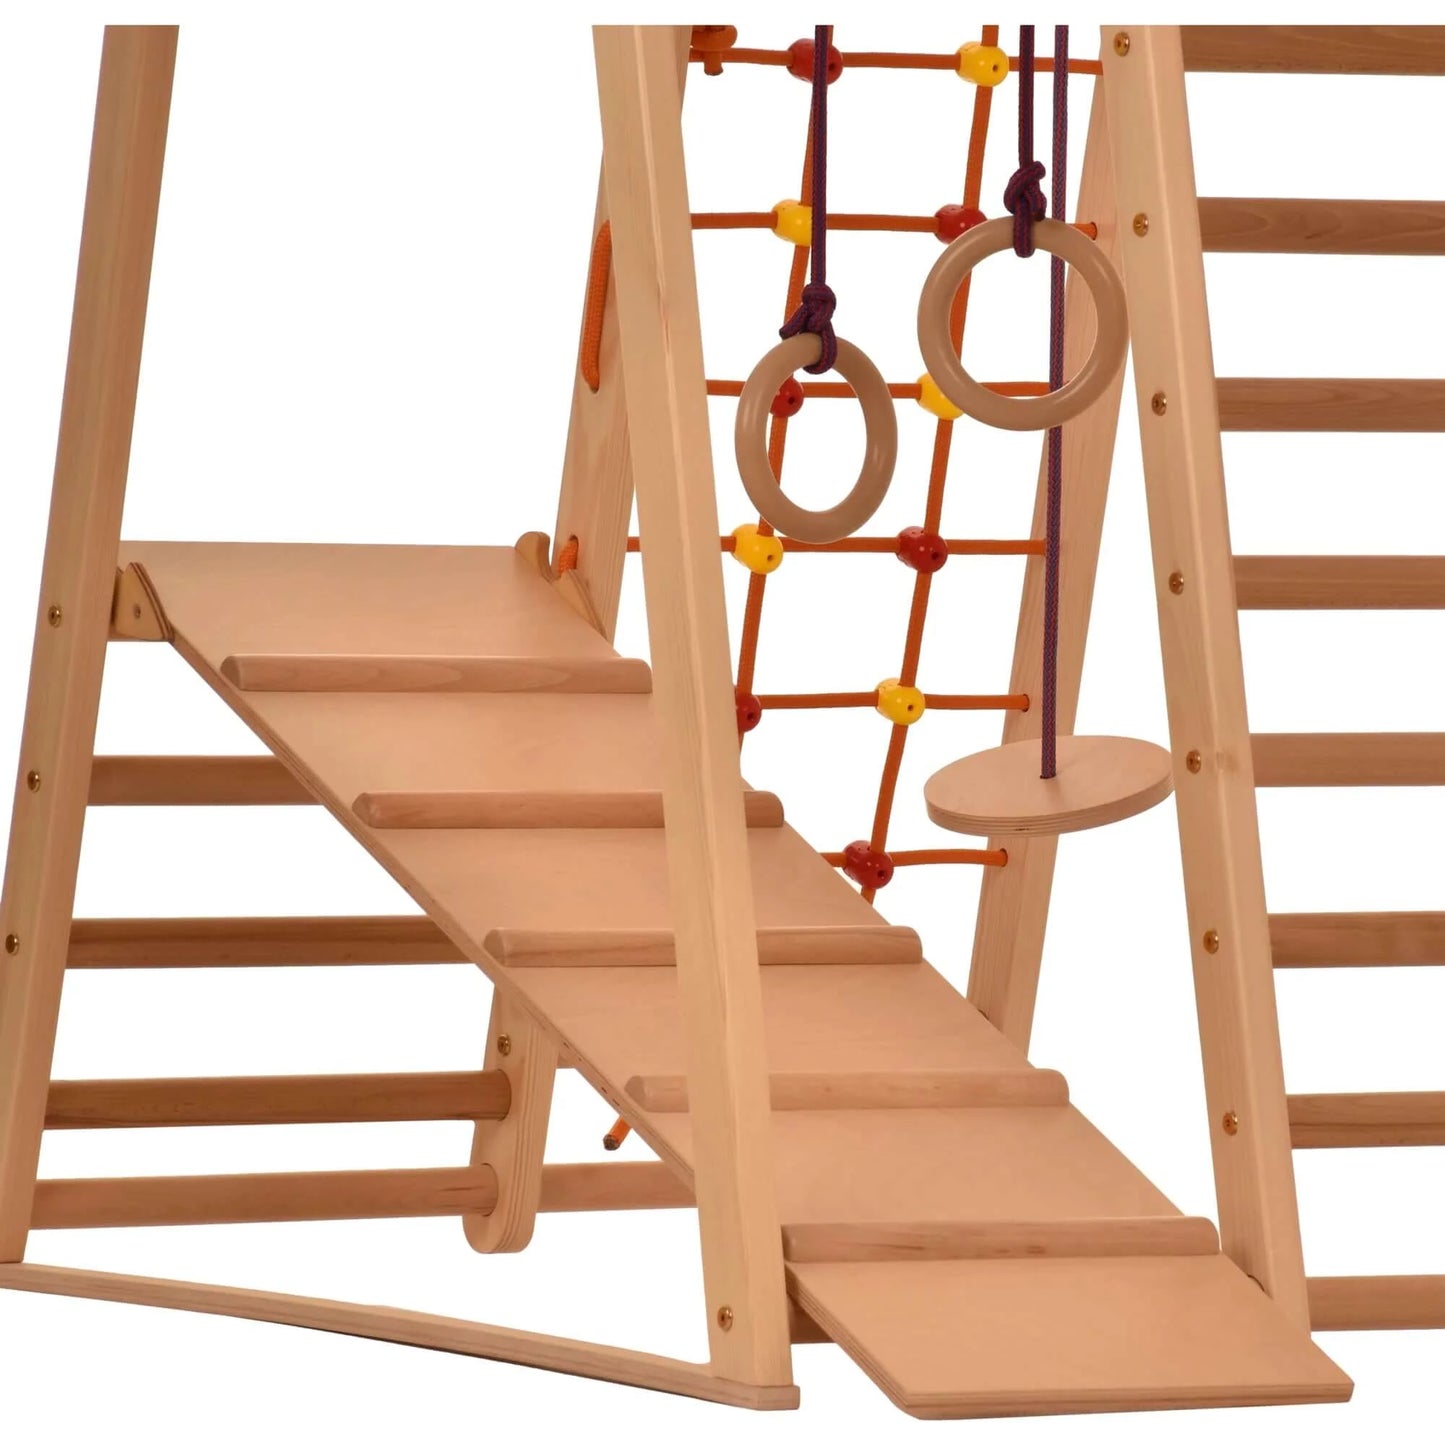 Indoor playground made of wood - climbing net, Swedish ladder, rings, slide